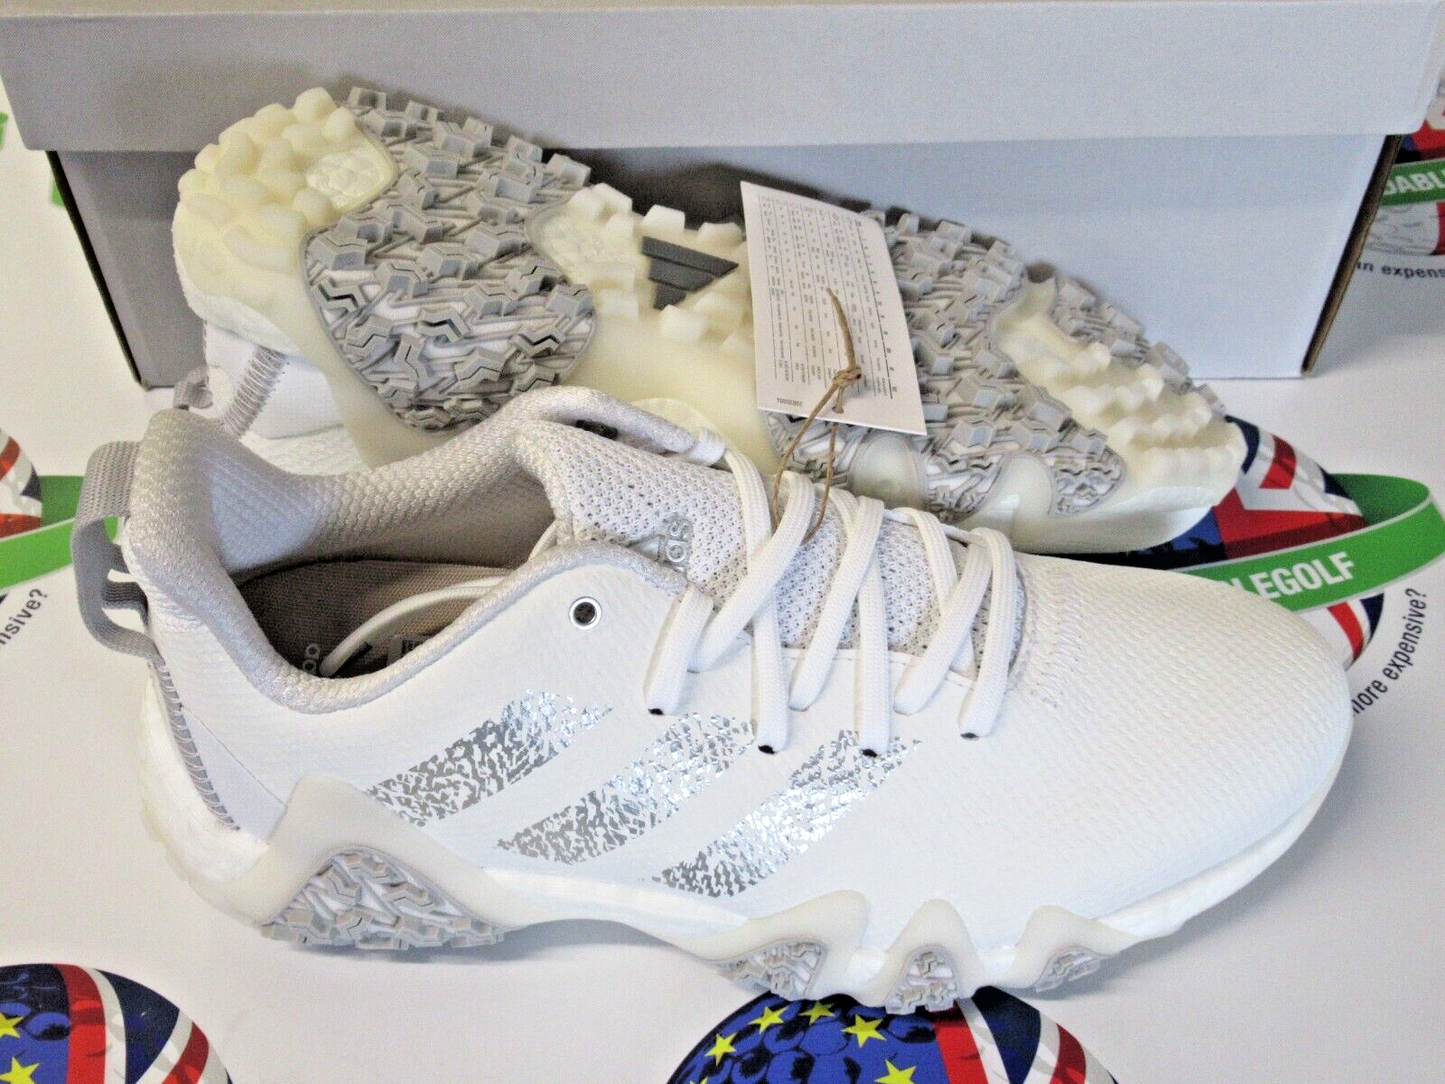 adidas code chaos 22 waterproof golf shoes white/grey/silver uk size 7 medium